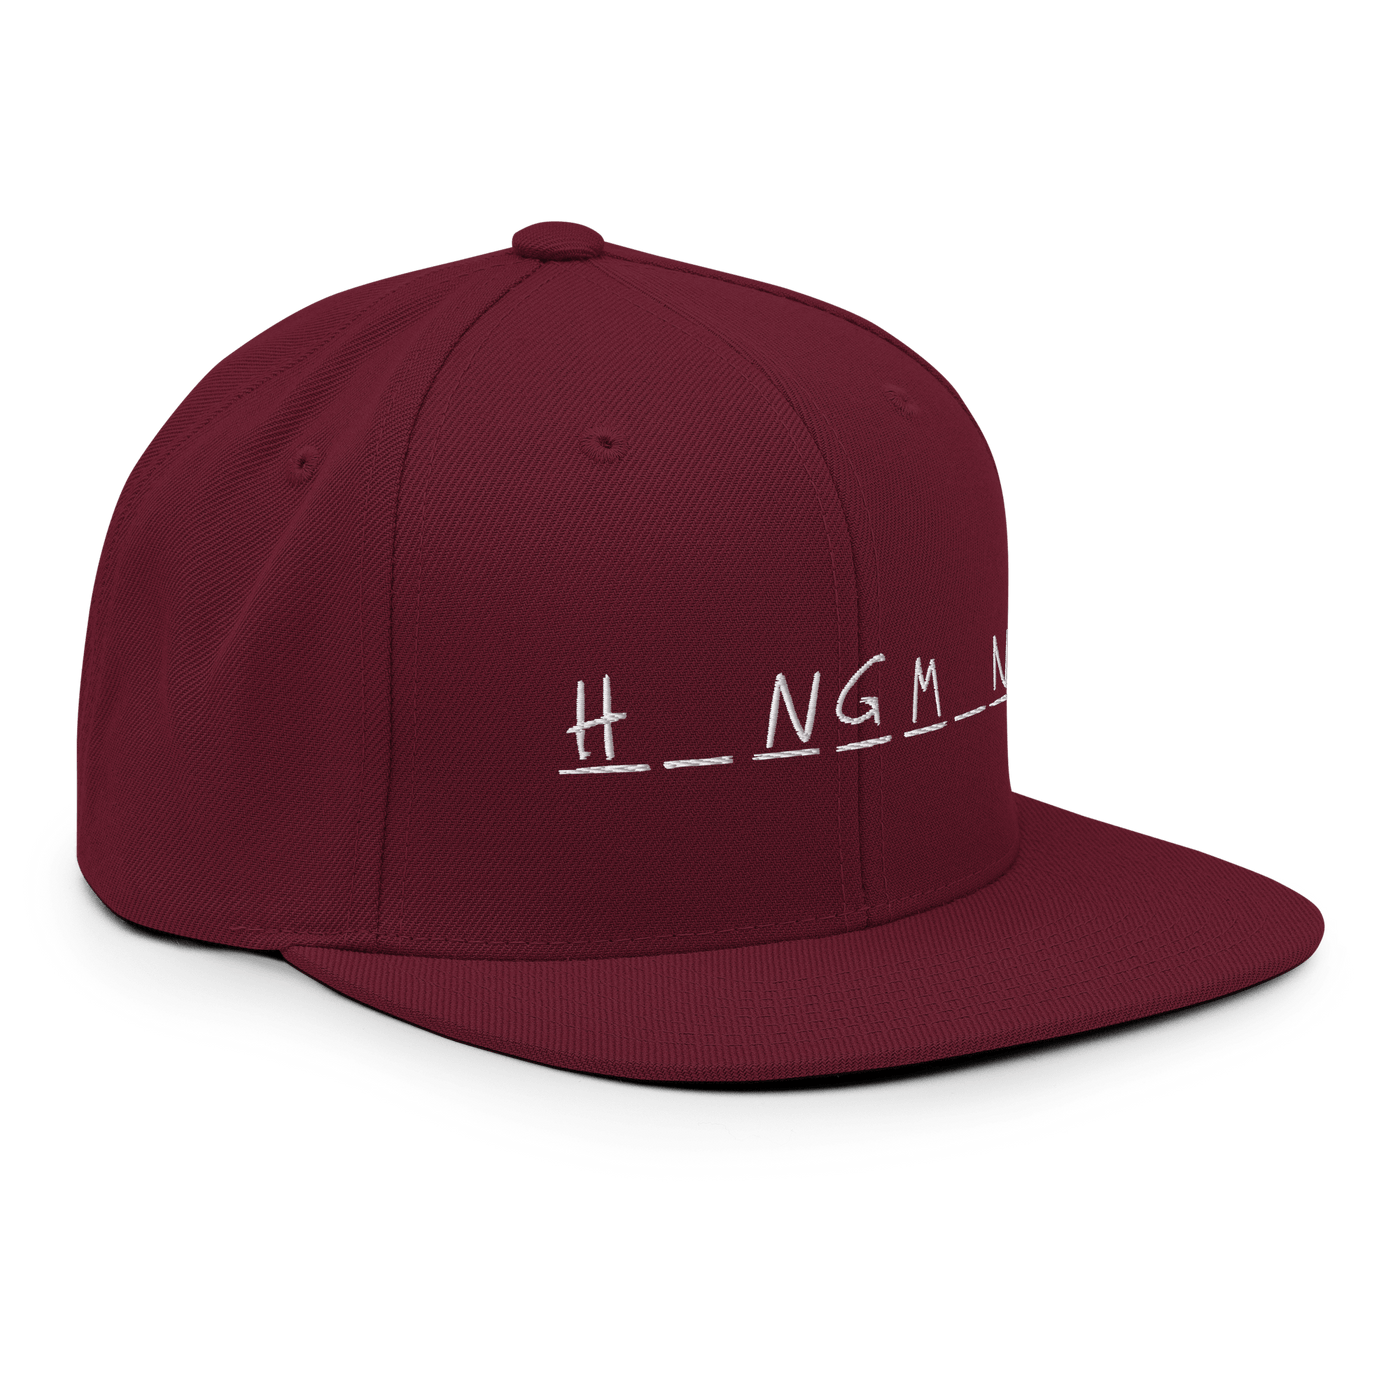 Hangman Snapback - Maroon - - Just Another Cap Store